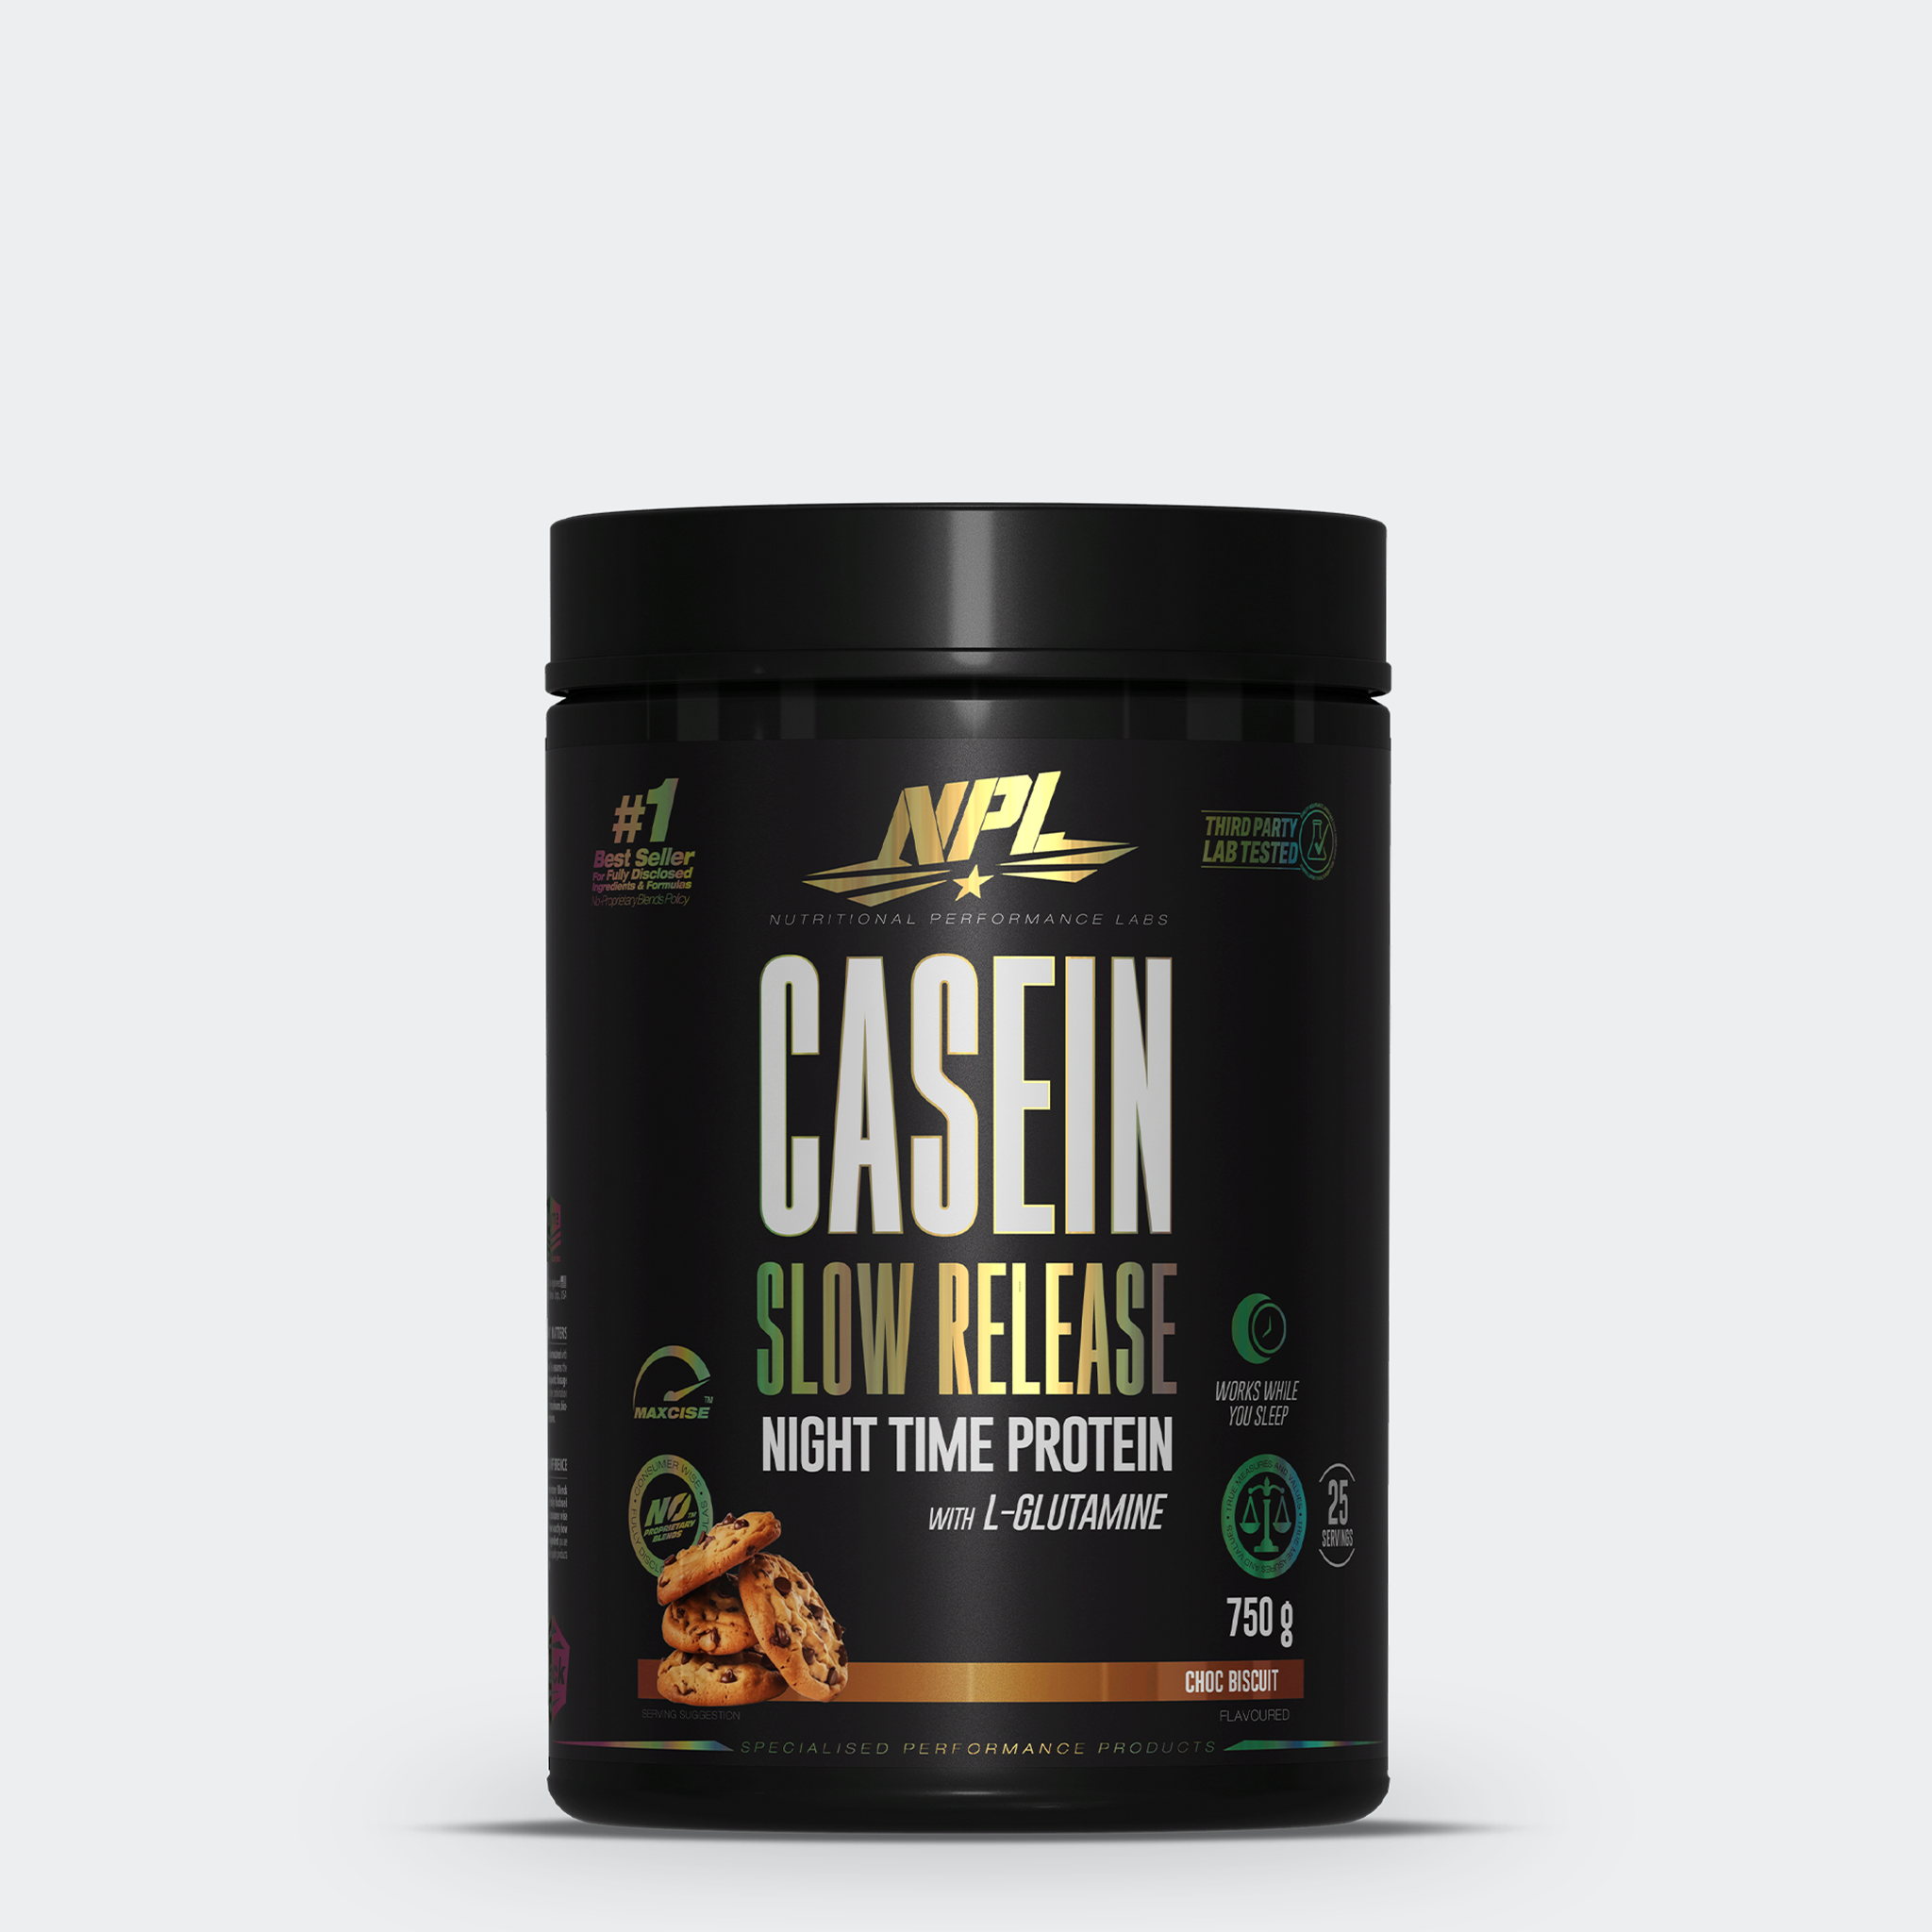 Casein Slow Release Night Time Protein